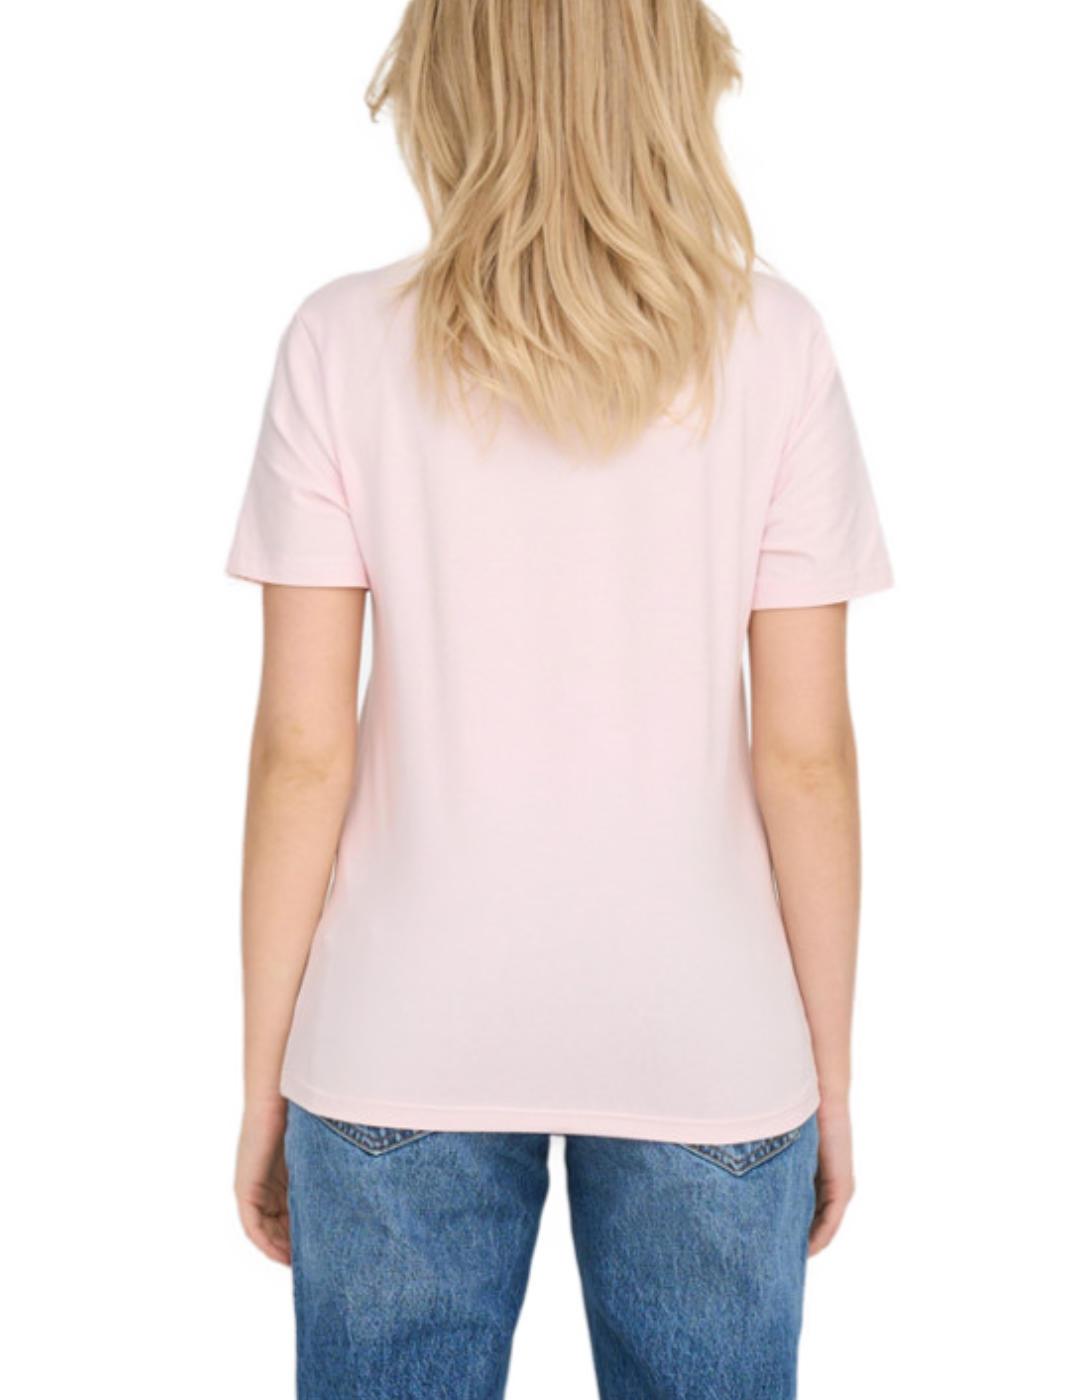 Camiseta Only Smiley rosa palo manga corta para mujer